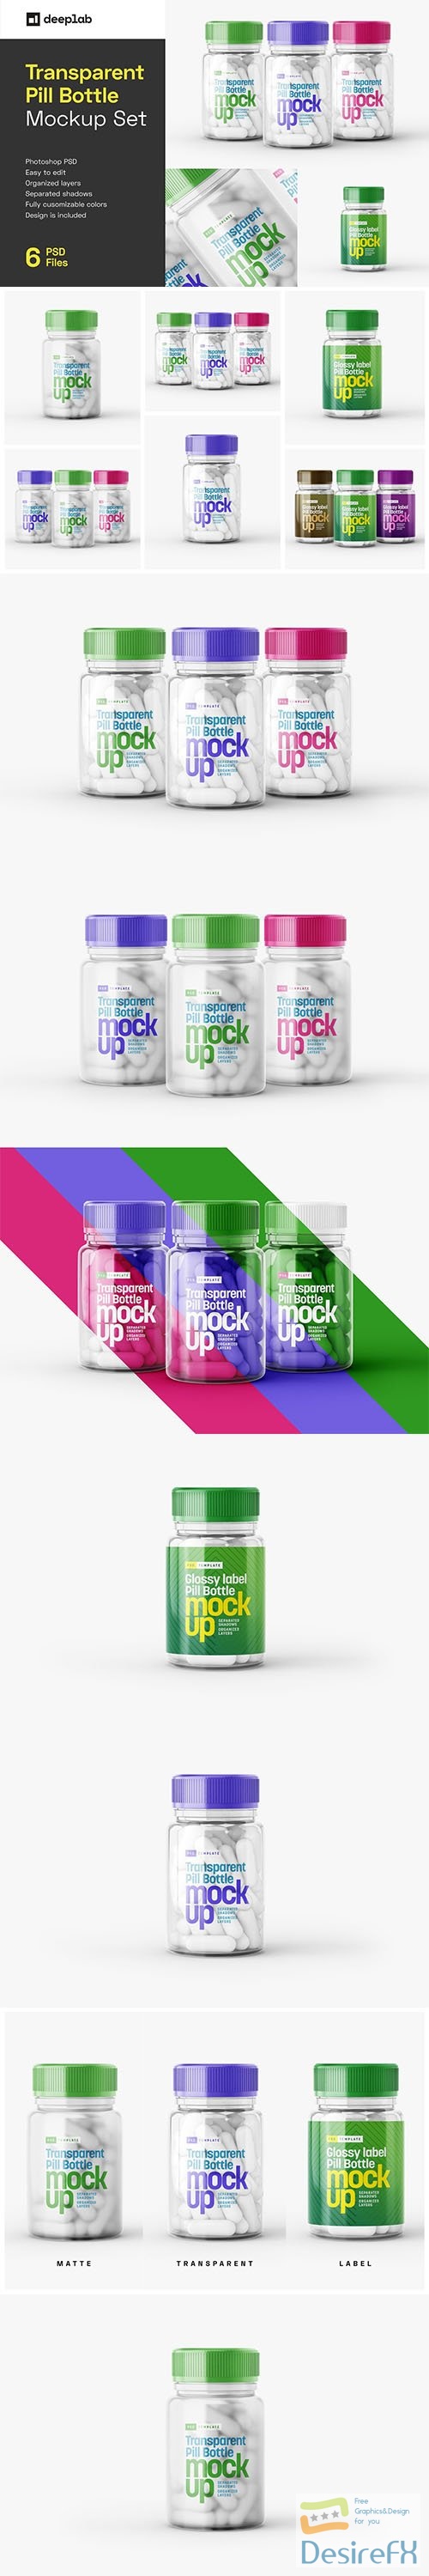 CreativeMarket - Transparent Pill Bottle Mockup Set 6070150